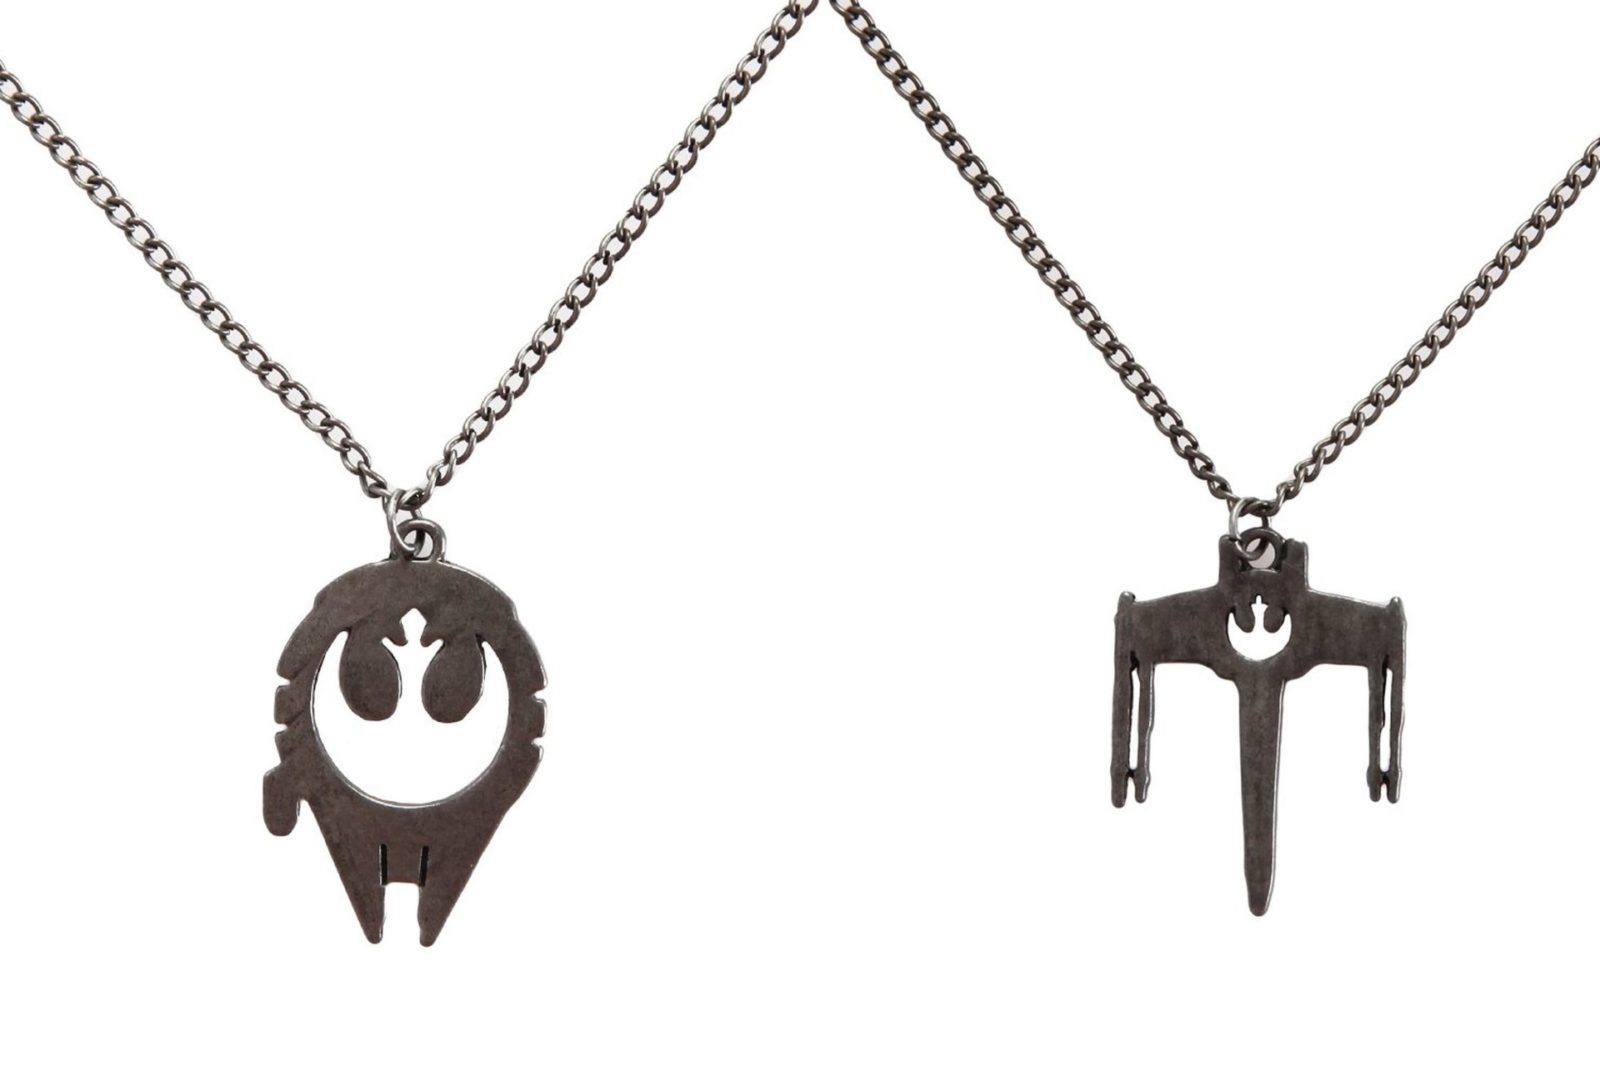 Rebel Alliance symbol cut-out necklaces